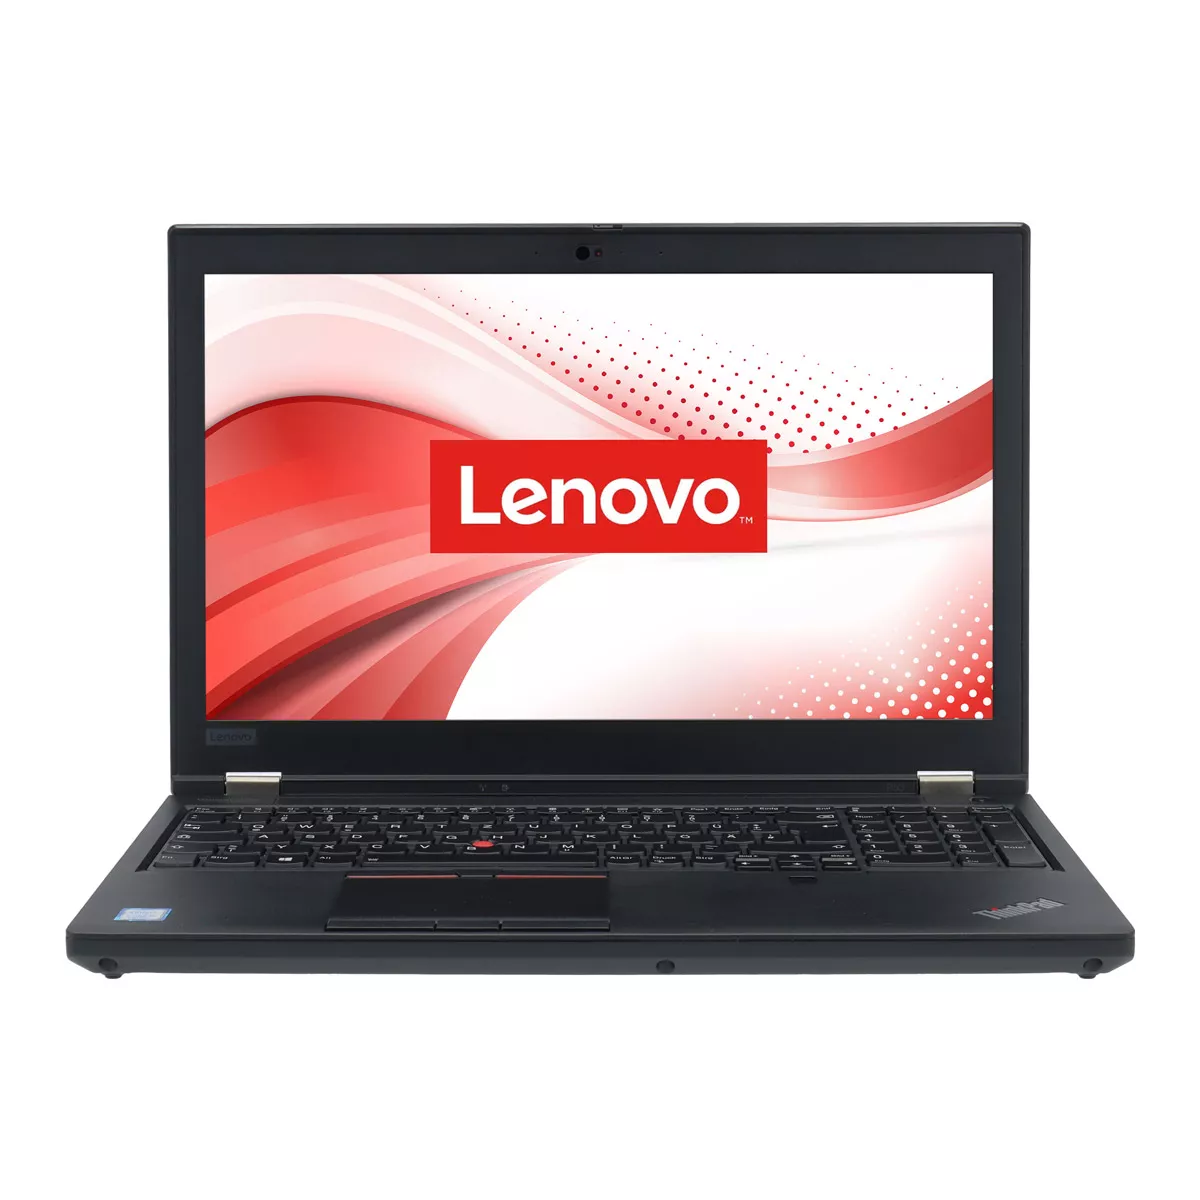 Lenovo ThinkPad P53 Core i9 9880H nVidia Quadro RTX 4000 32 GB 500 GB M.2 nVME SSD Webcam A